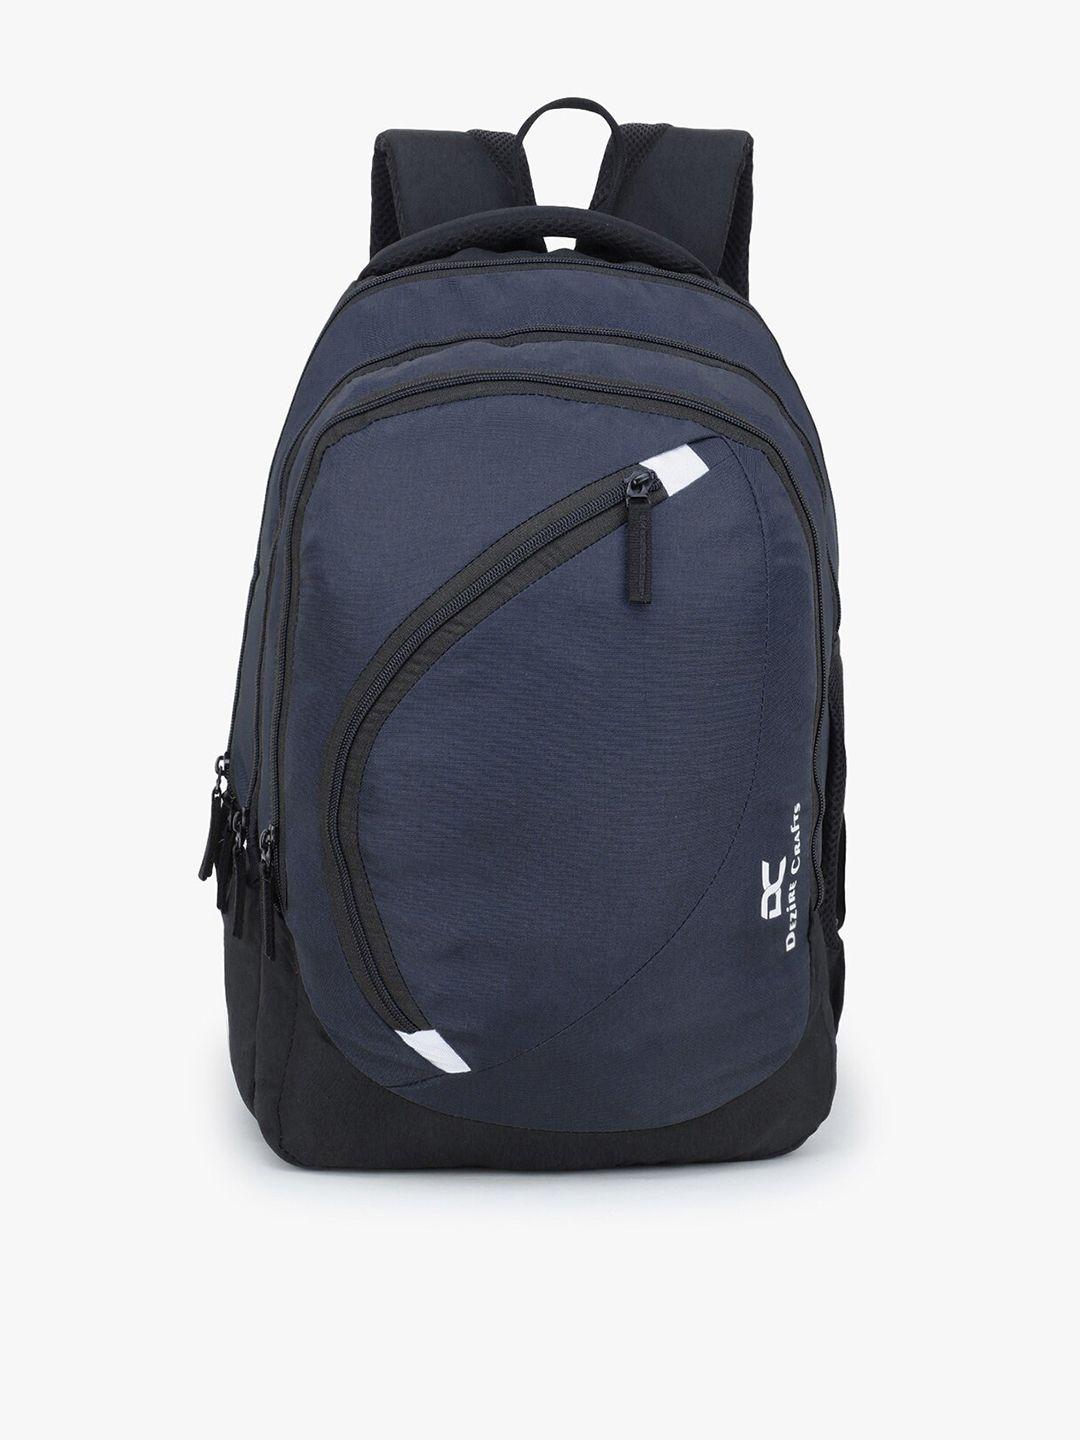 dezire crafts unisex navy blue backpack